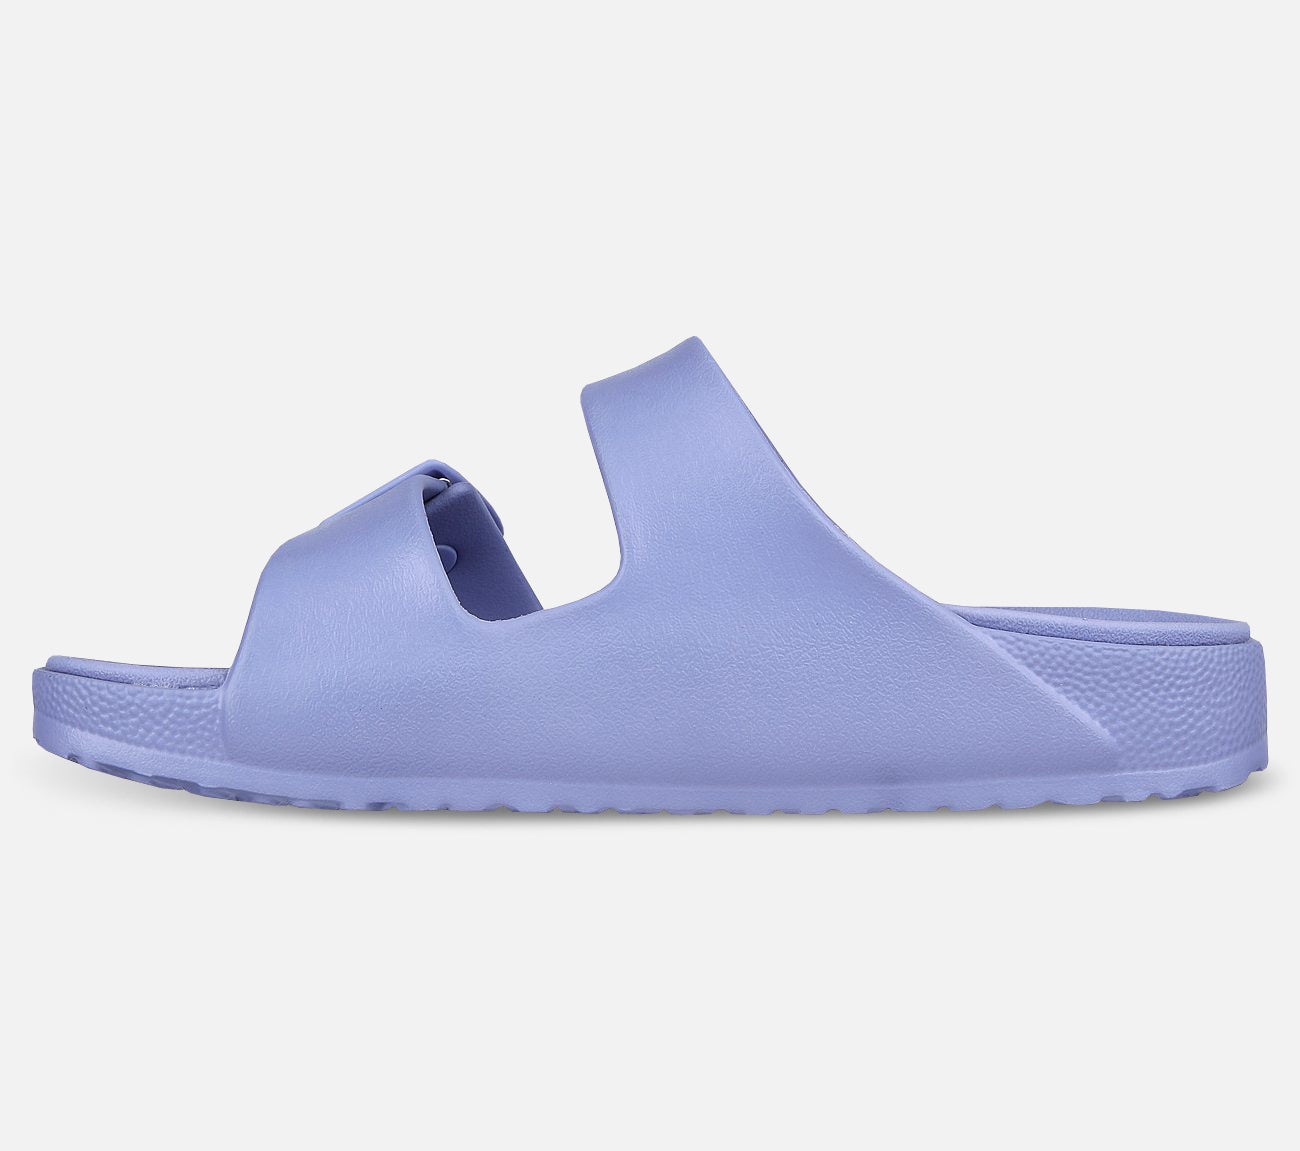 Arch Fit Cali Breeze 2.0 Sandal Skechers